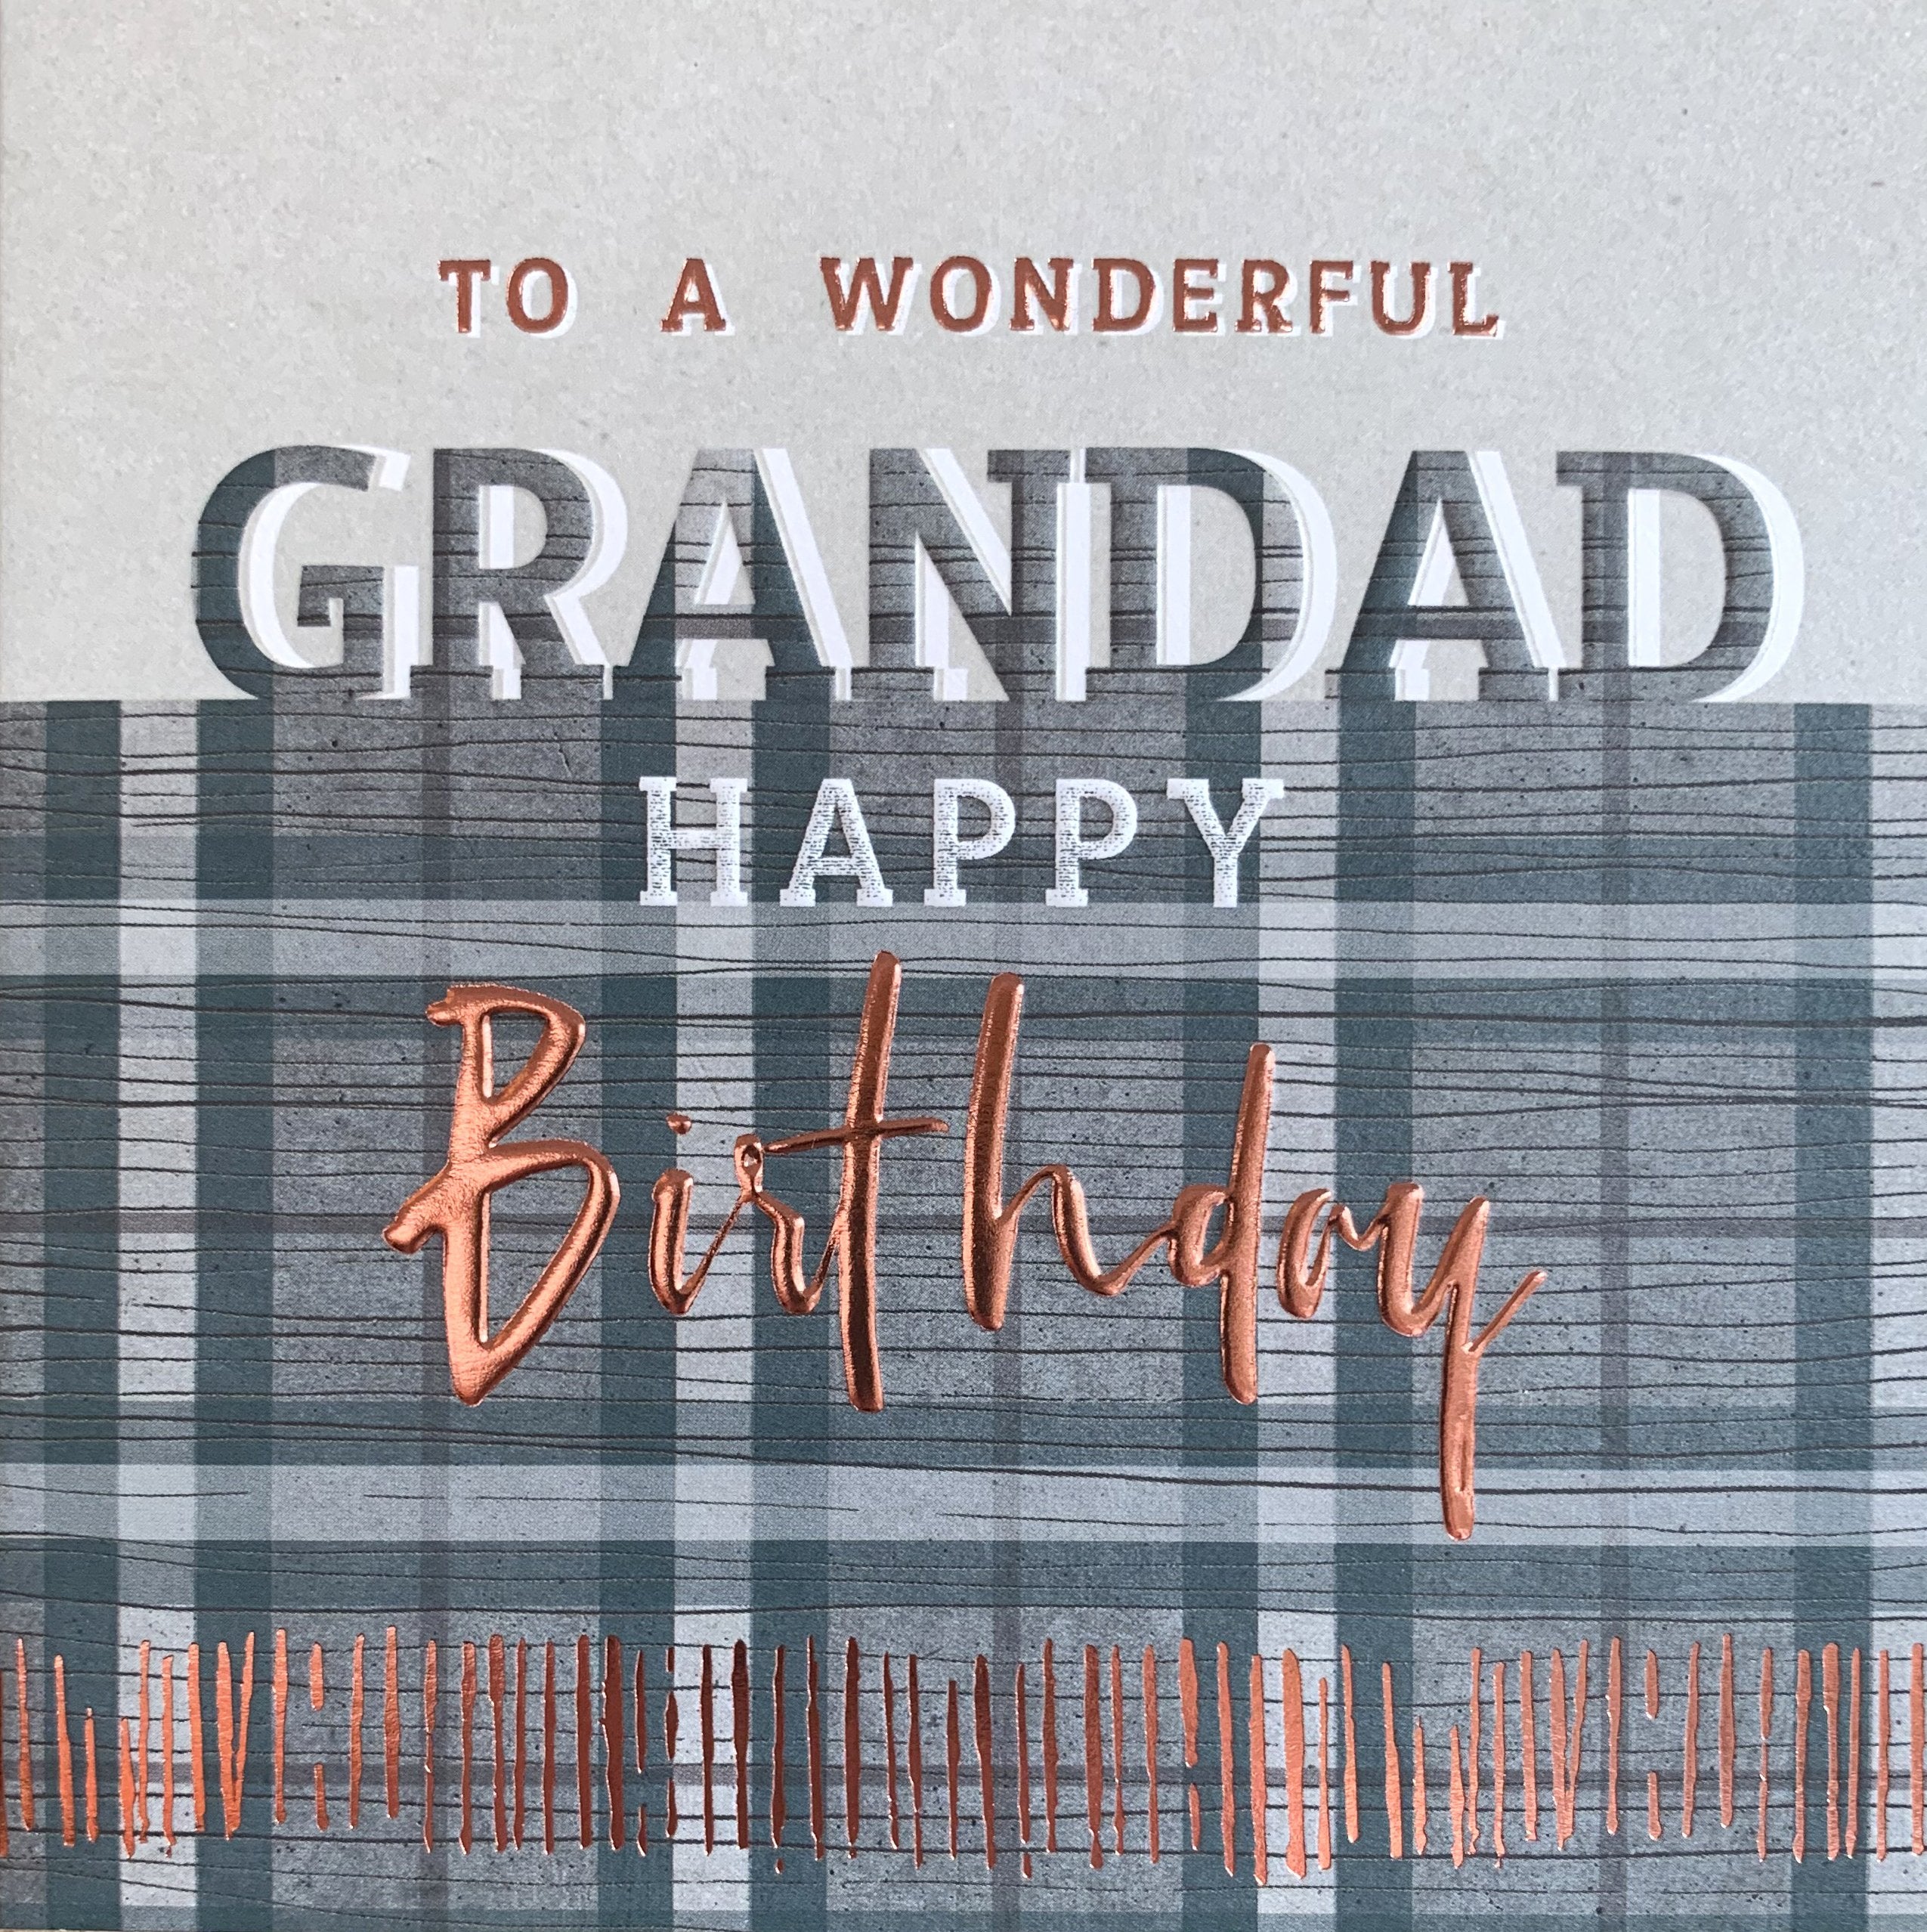 Manifold - Wonderful Grandad Birthday Card |More Than Just A Gift